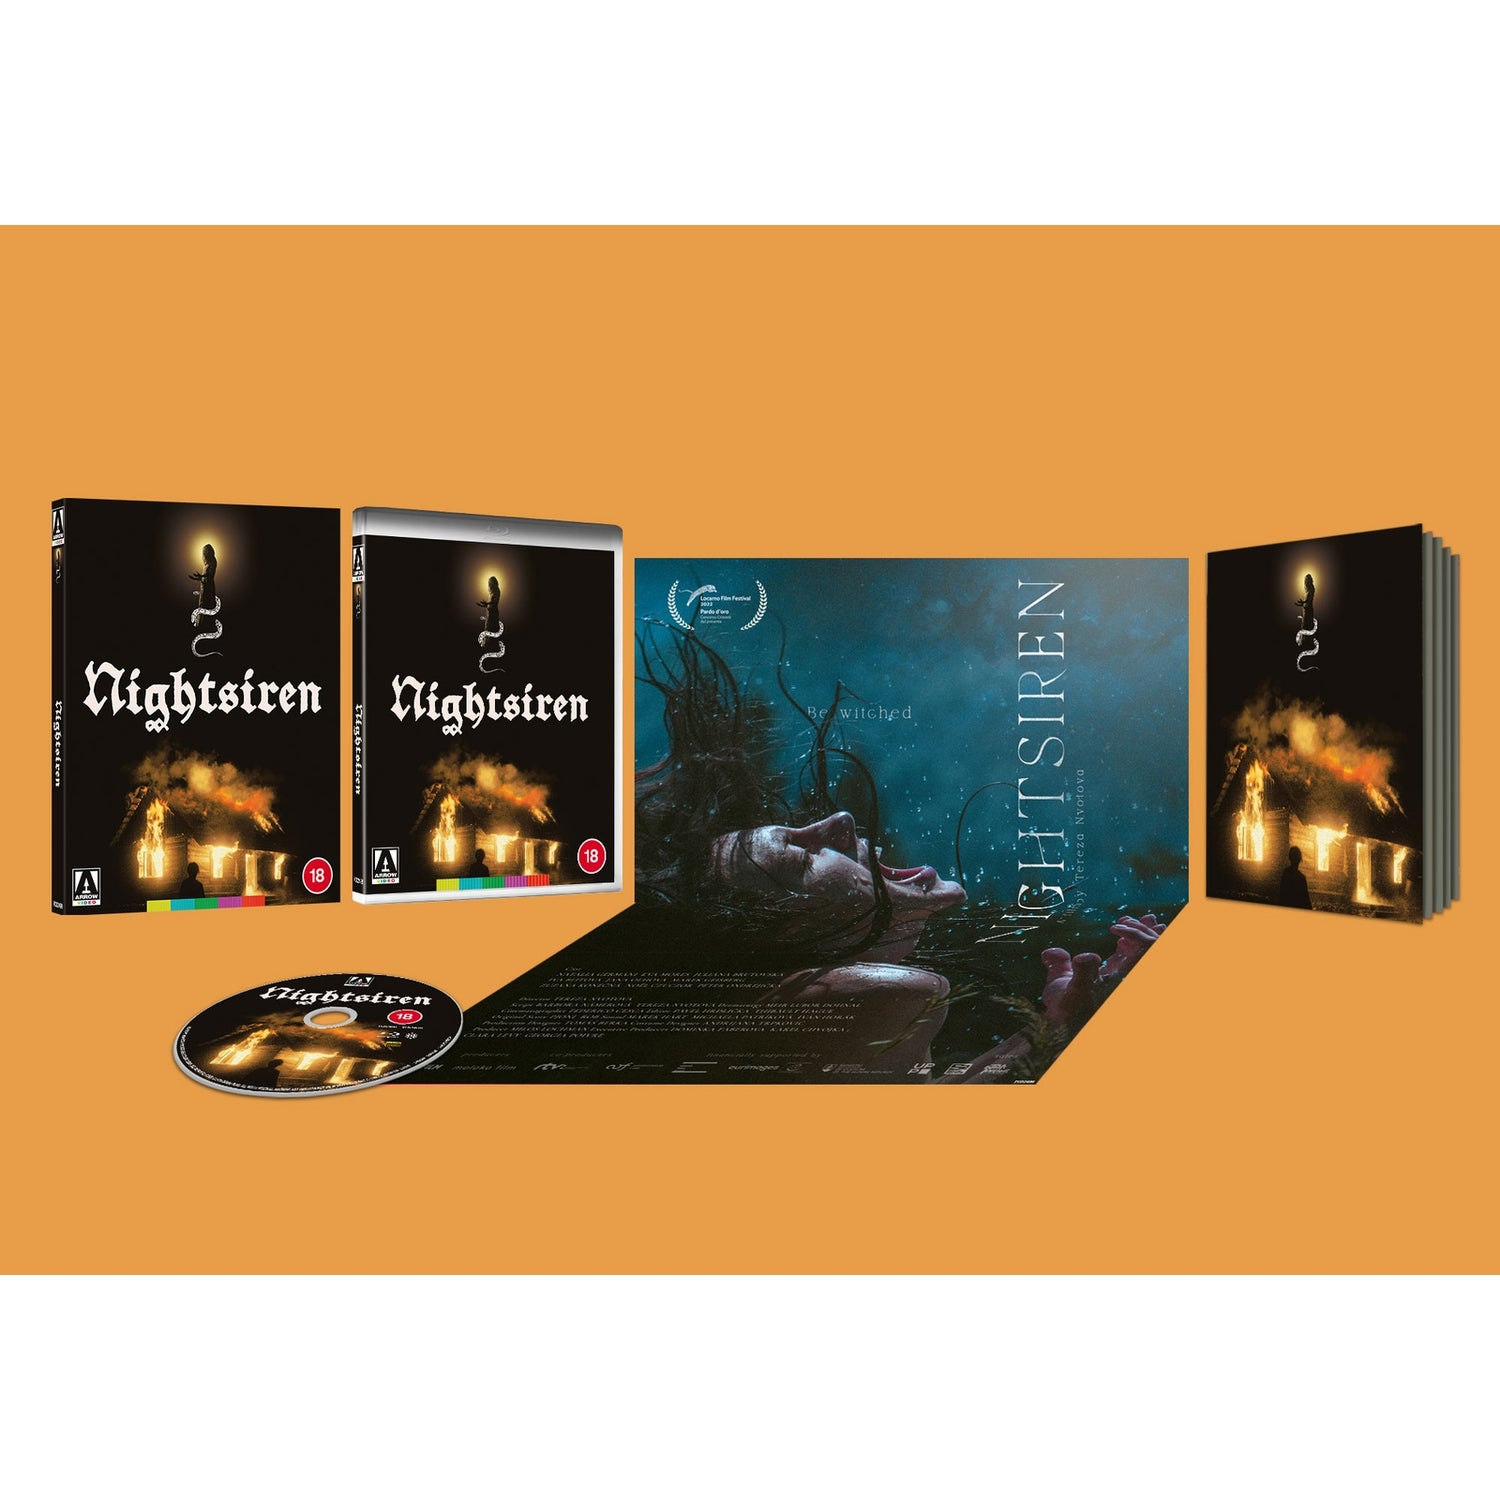 Nightsiren Limited Edition Blu-ray